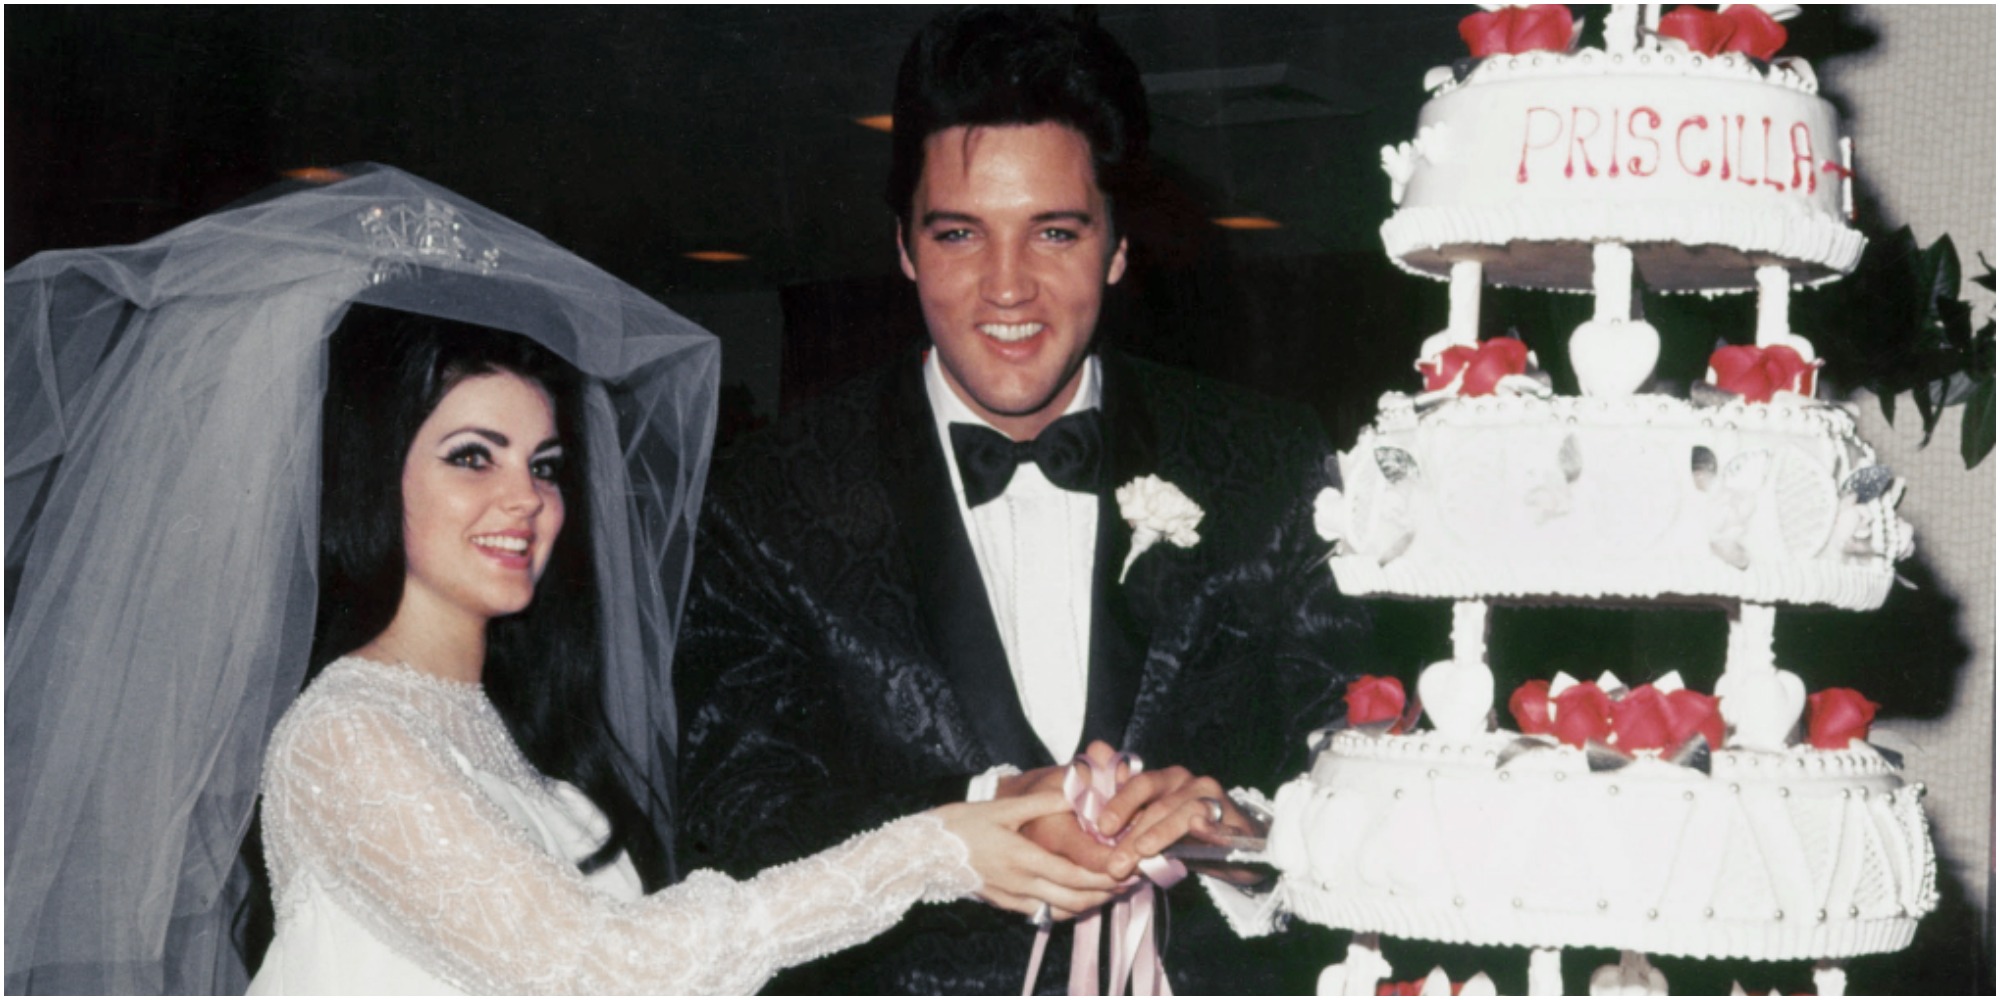 Elvis and Priscilla Presley cake photograph.